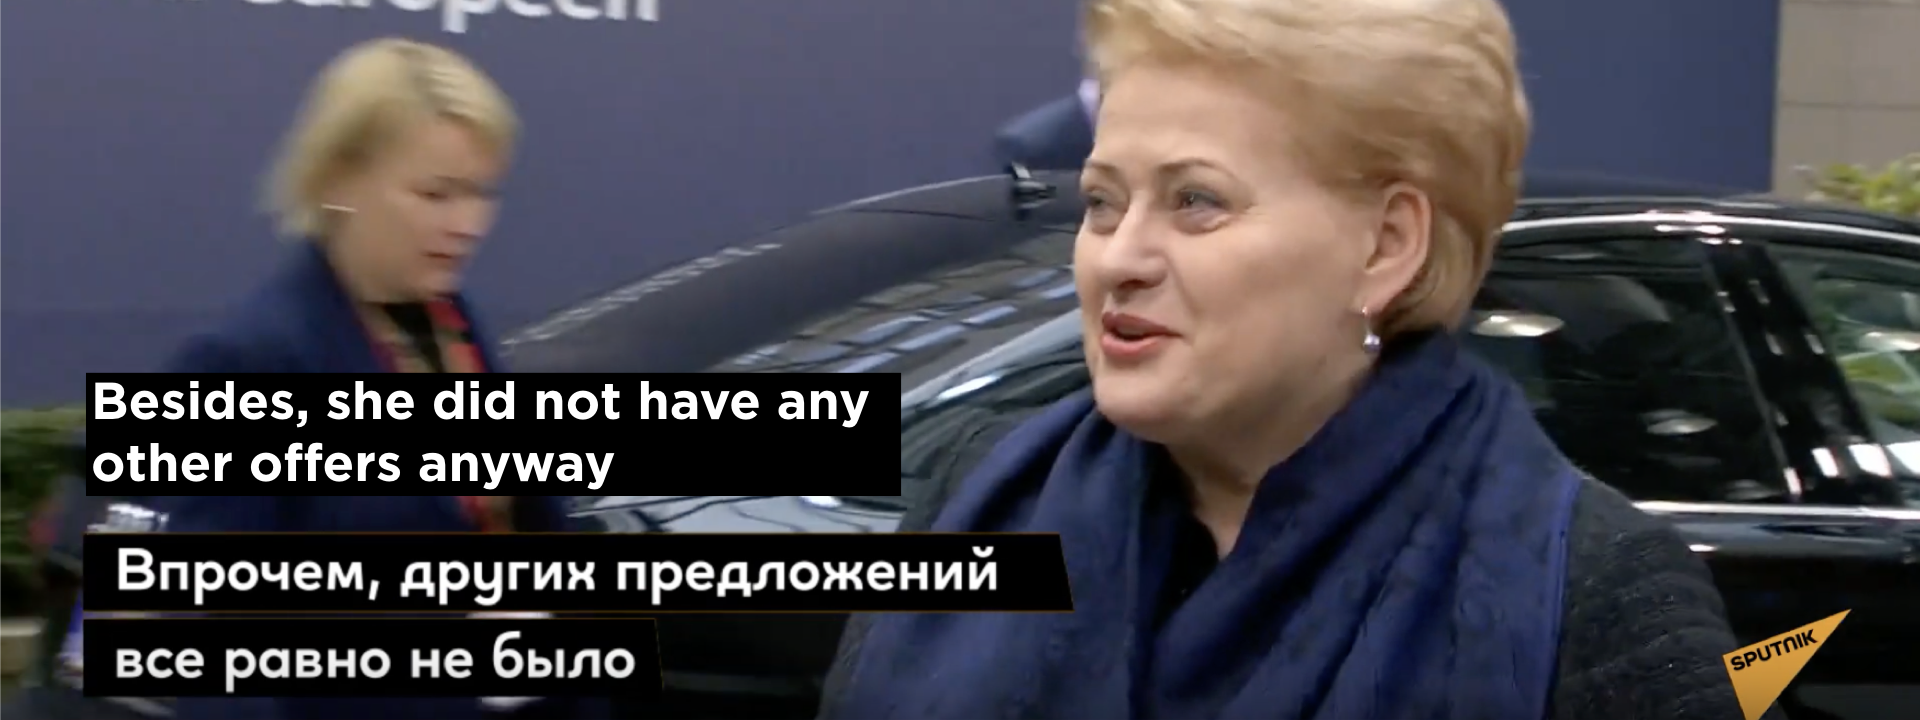 Grybauskaitėphobia: Kremlin media in Baltic states target former Lithuanian president